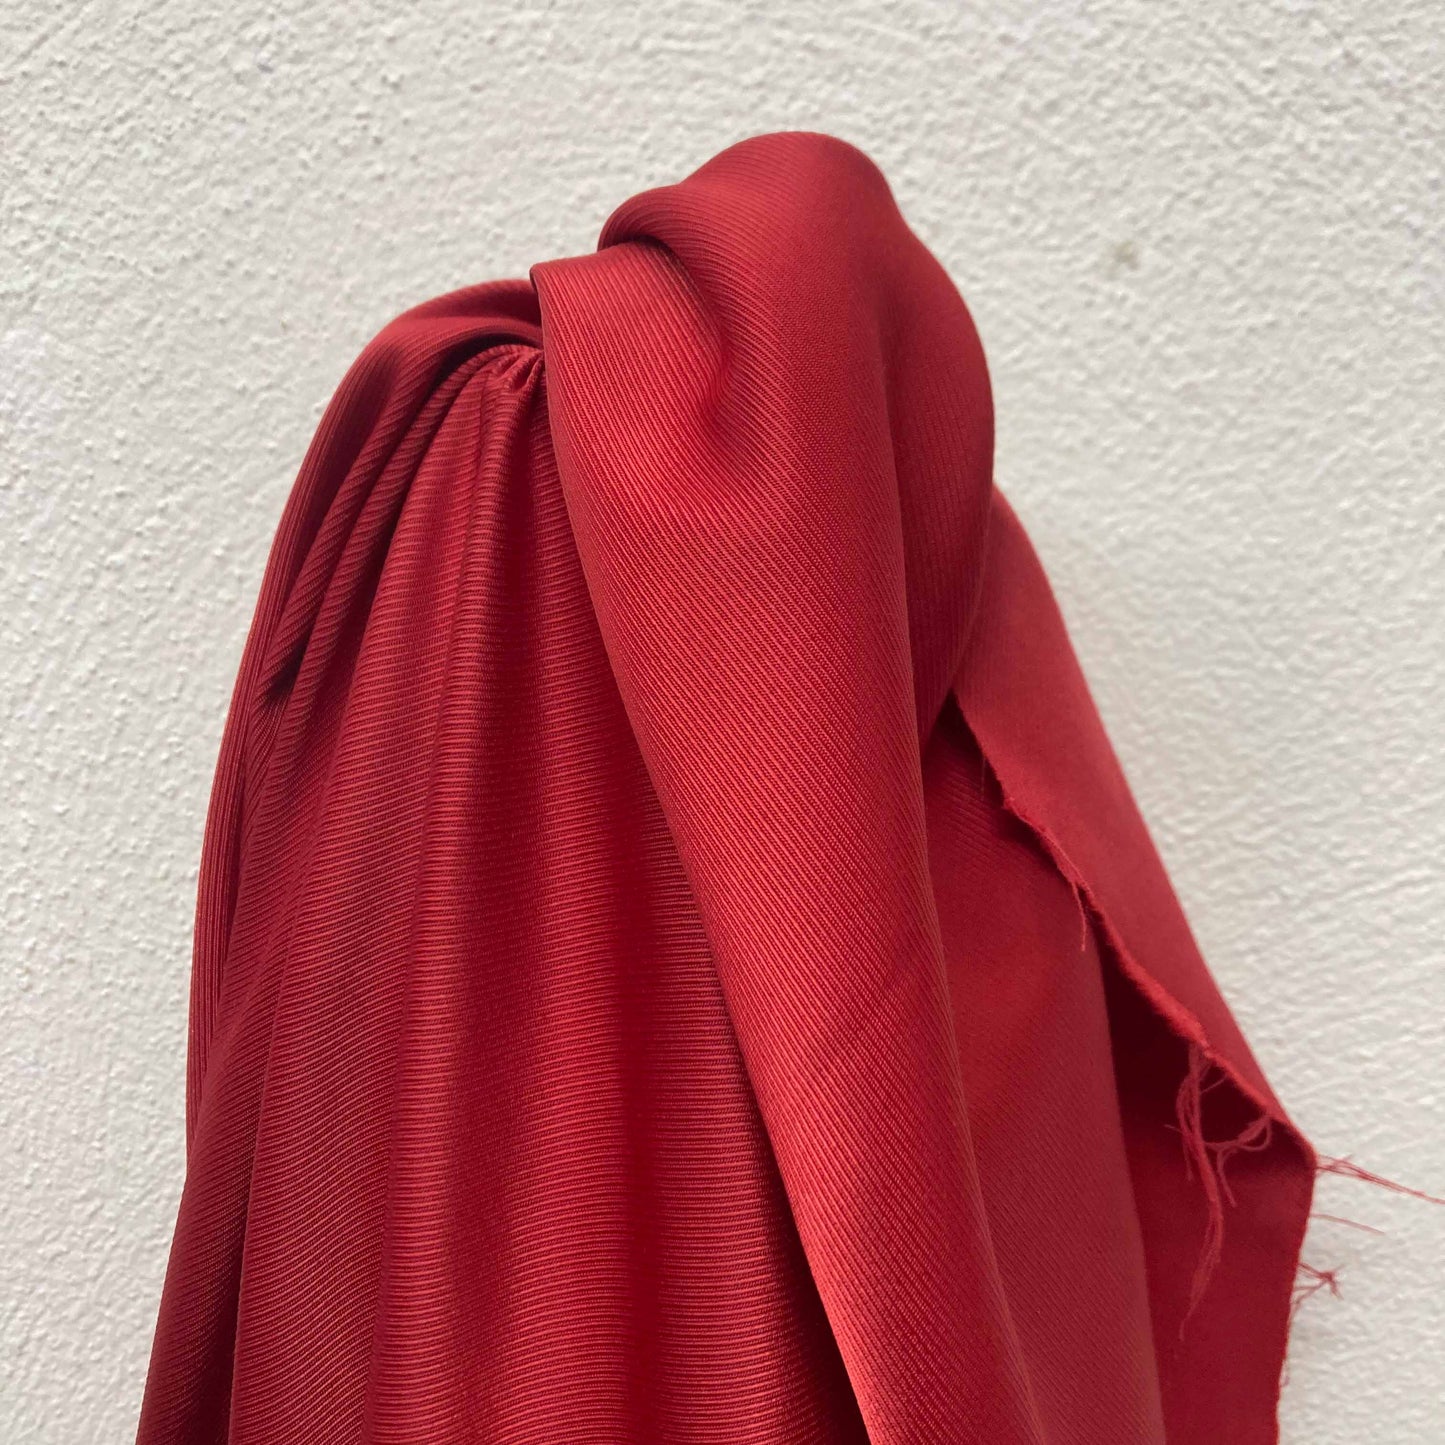 Satin Fabric - Red